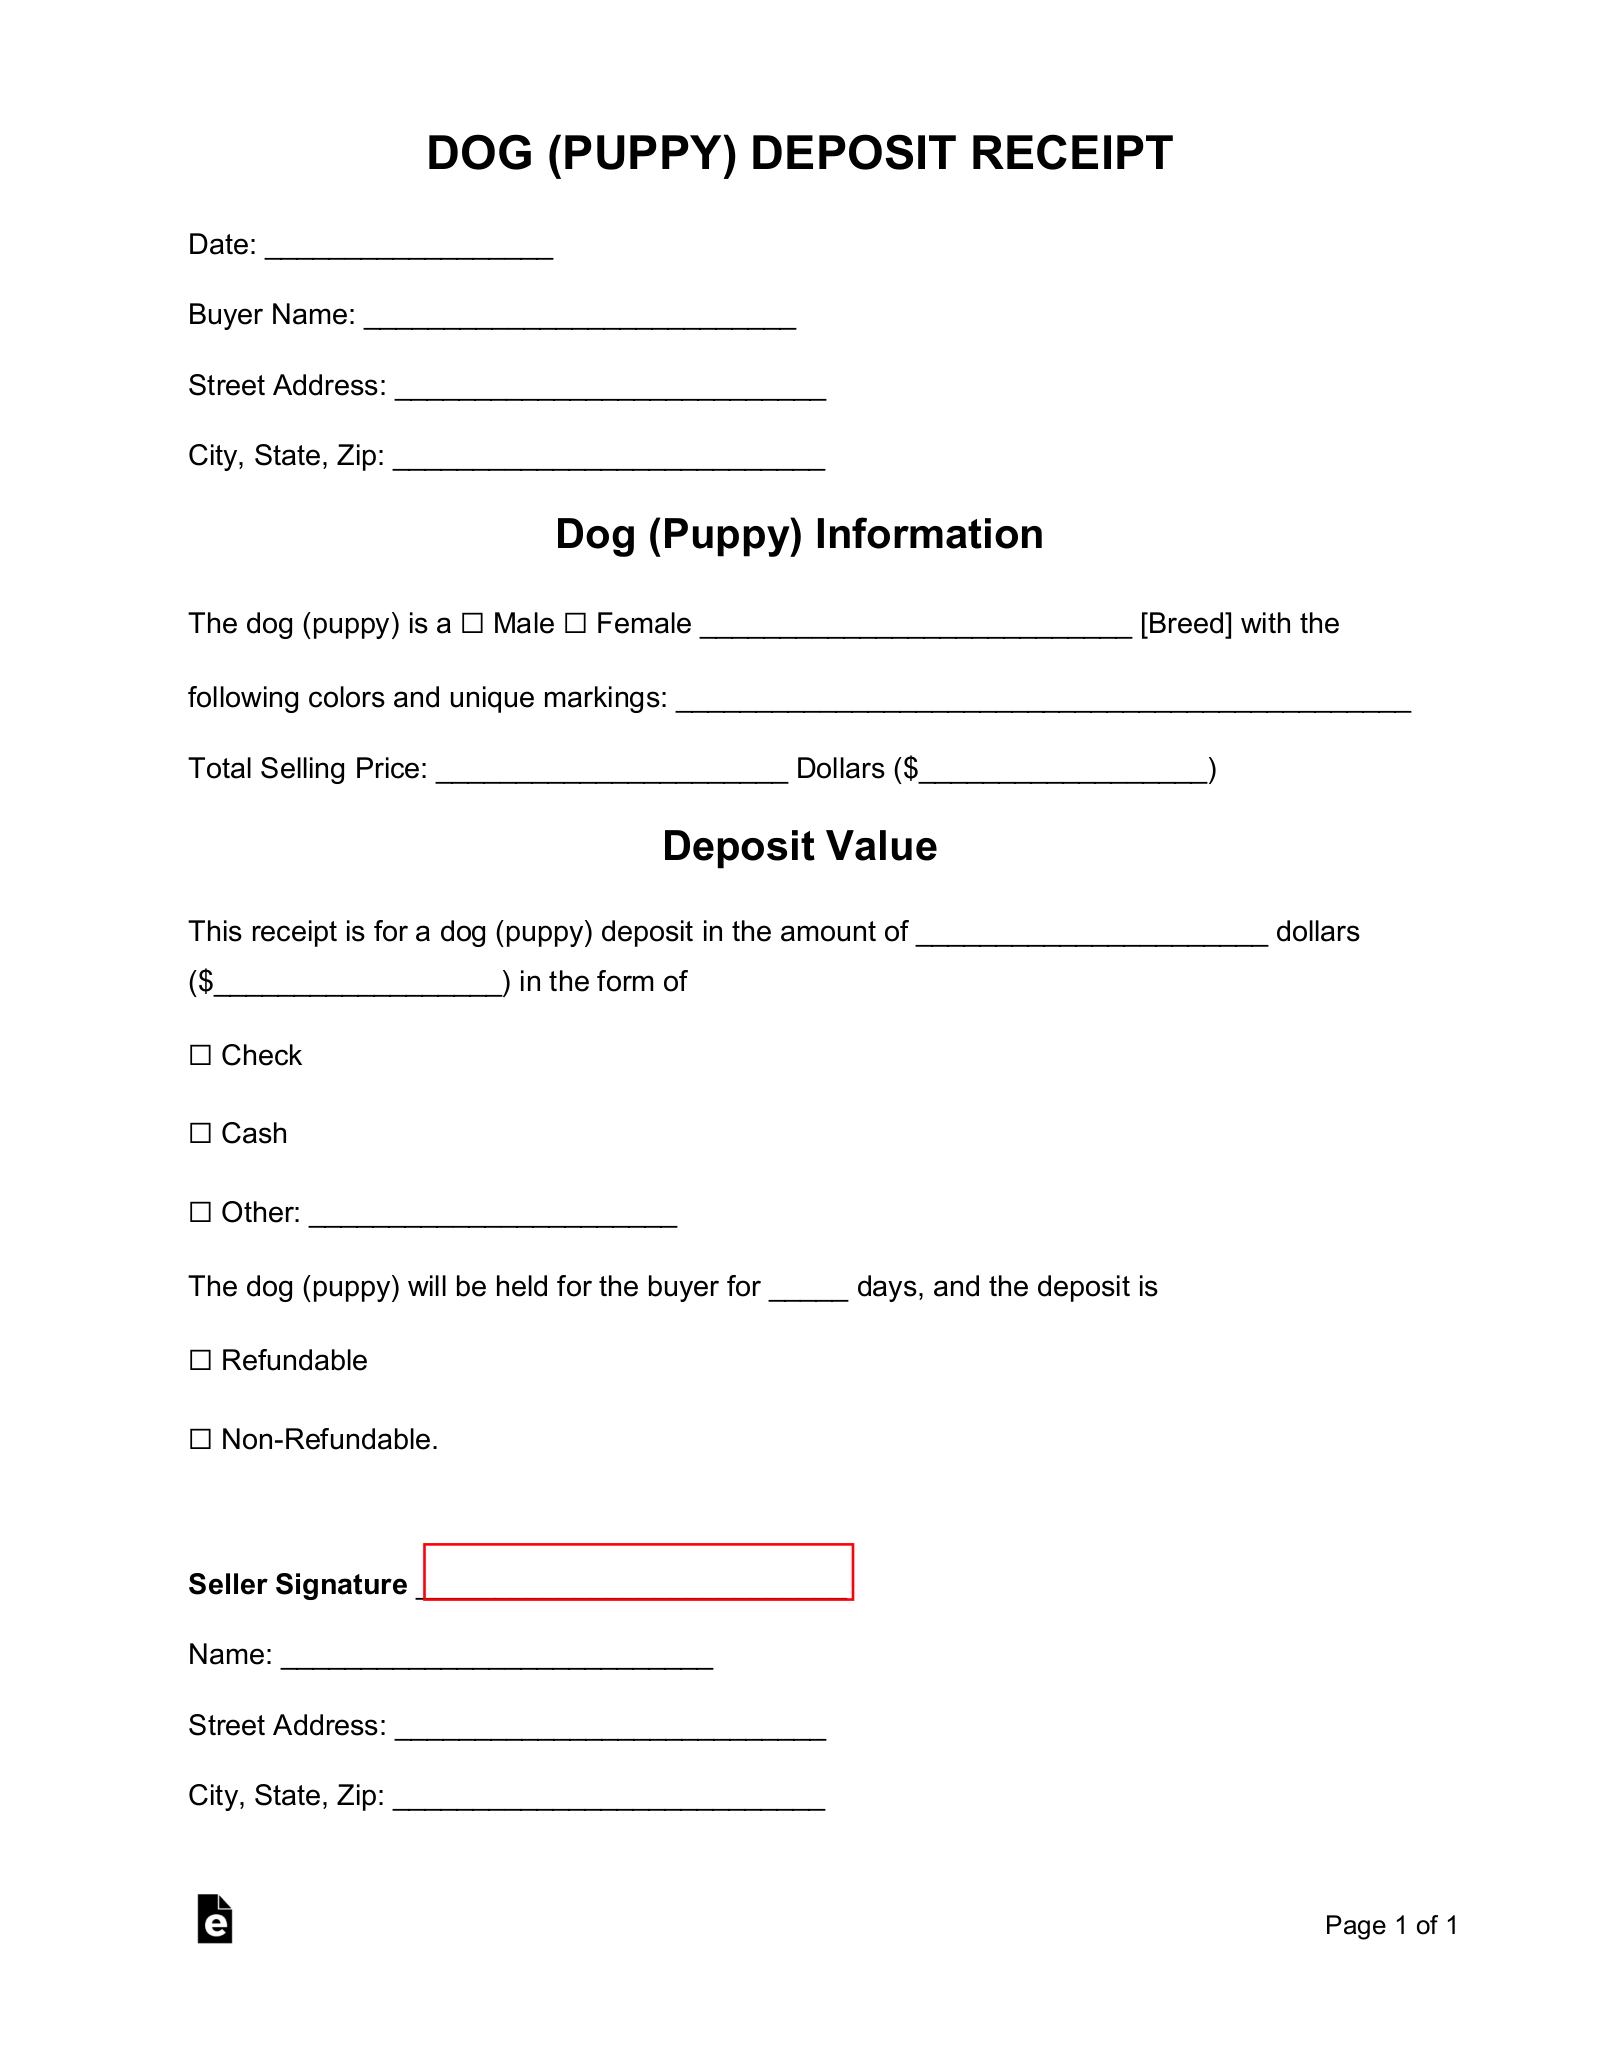 Free Dog (Puppy) Deposit Receipt Template Word PDF